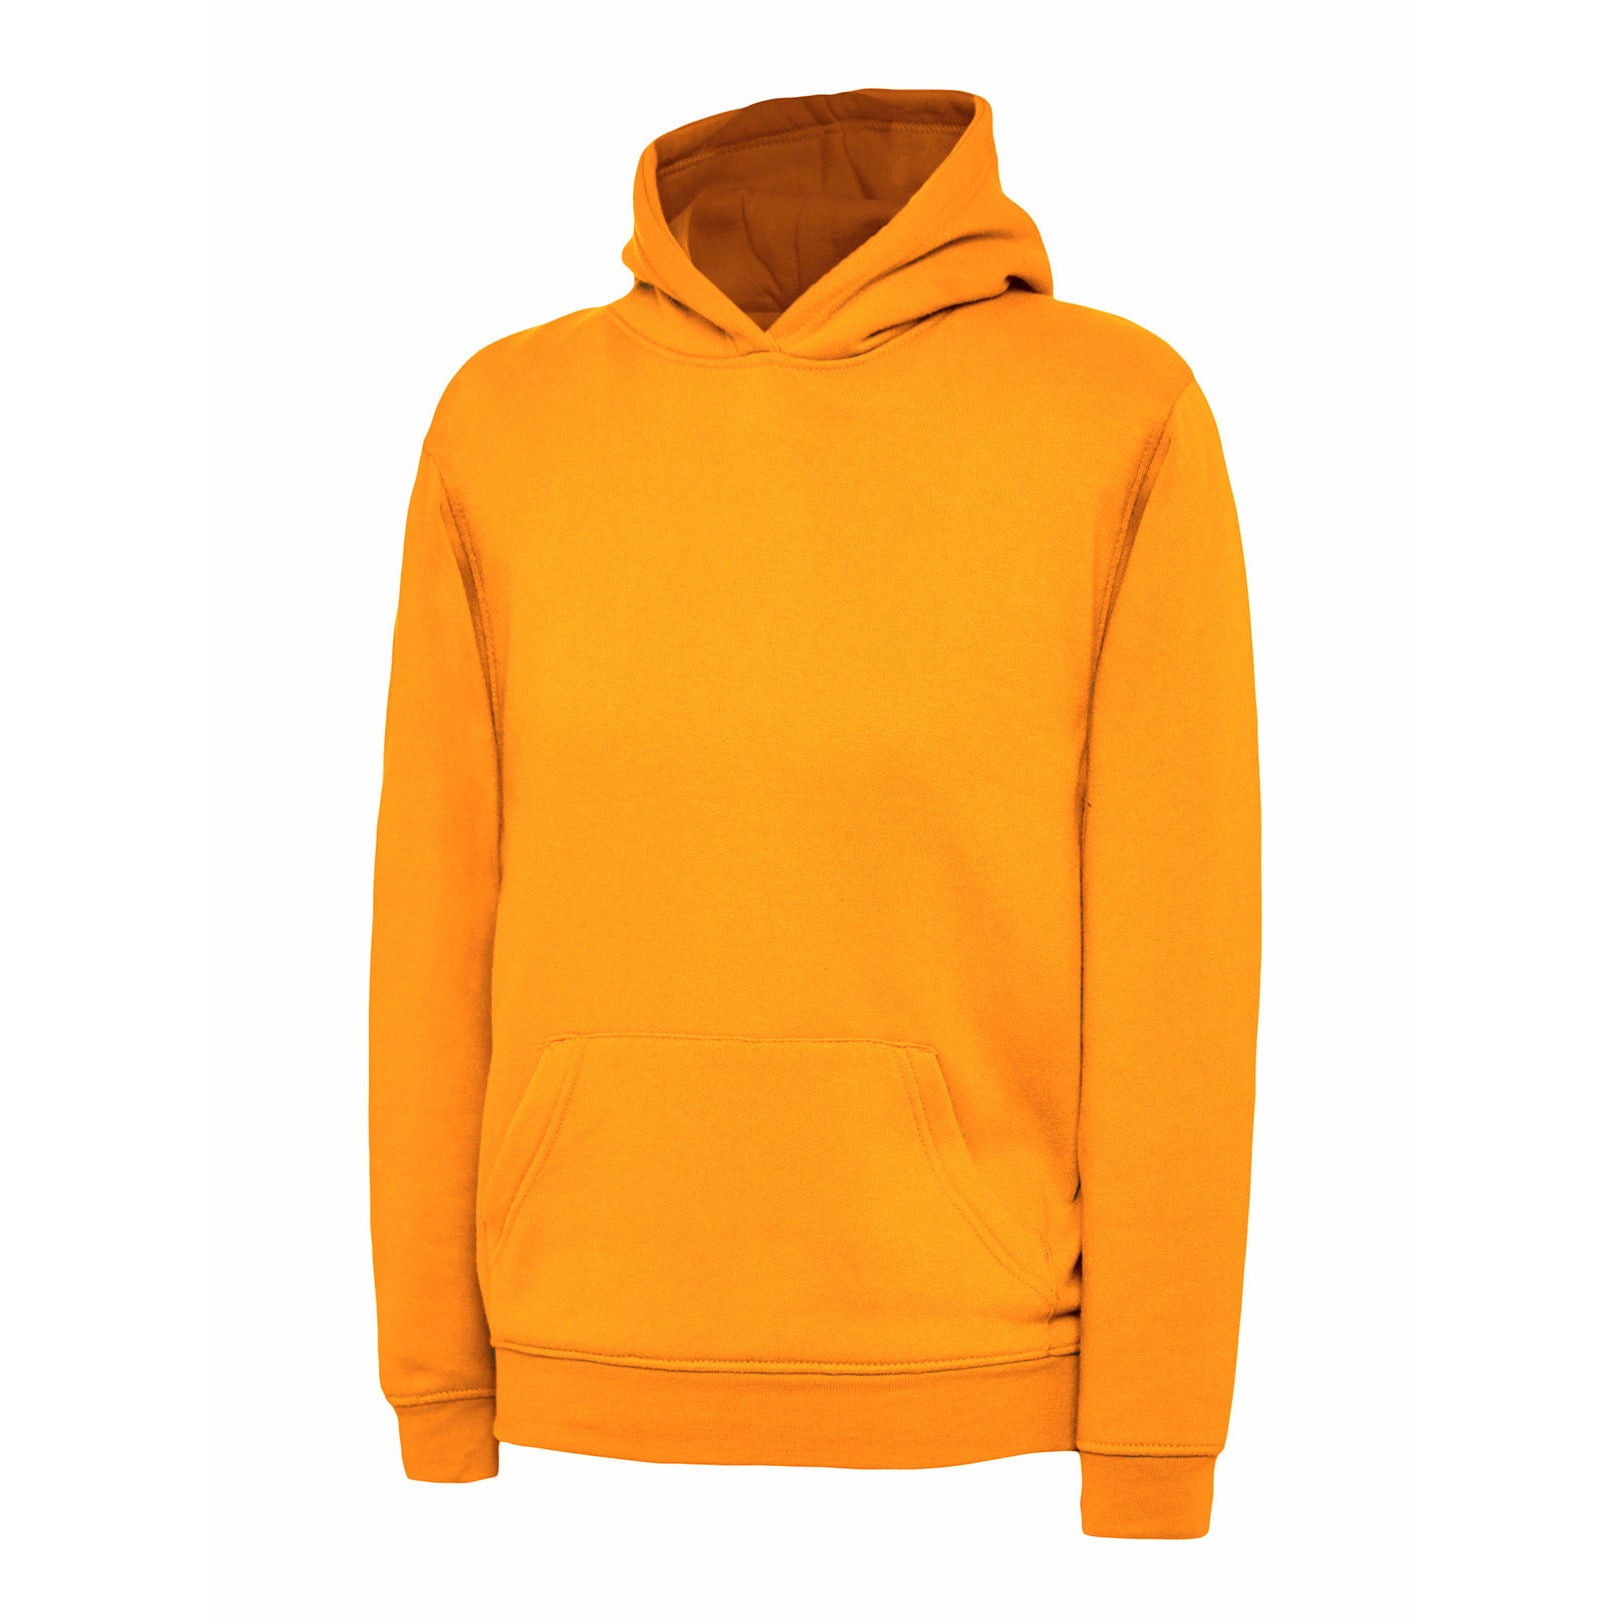 Childrens Hooded Sweatshirt (2 - 4 YRS) Orange